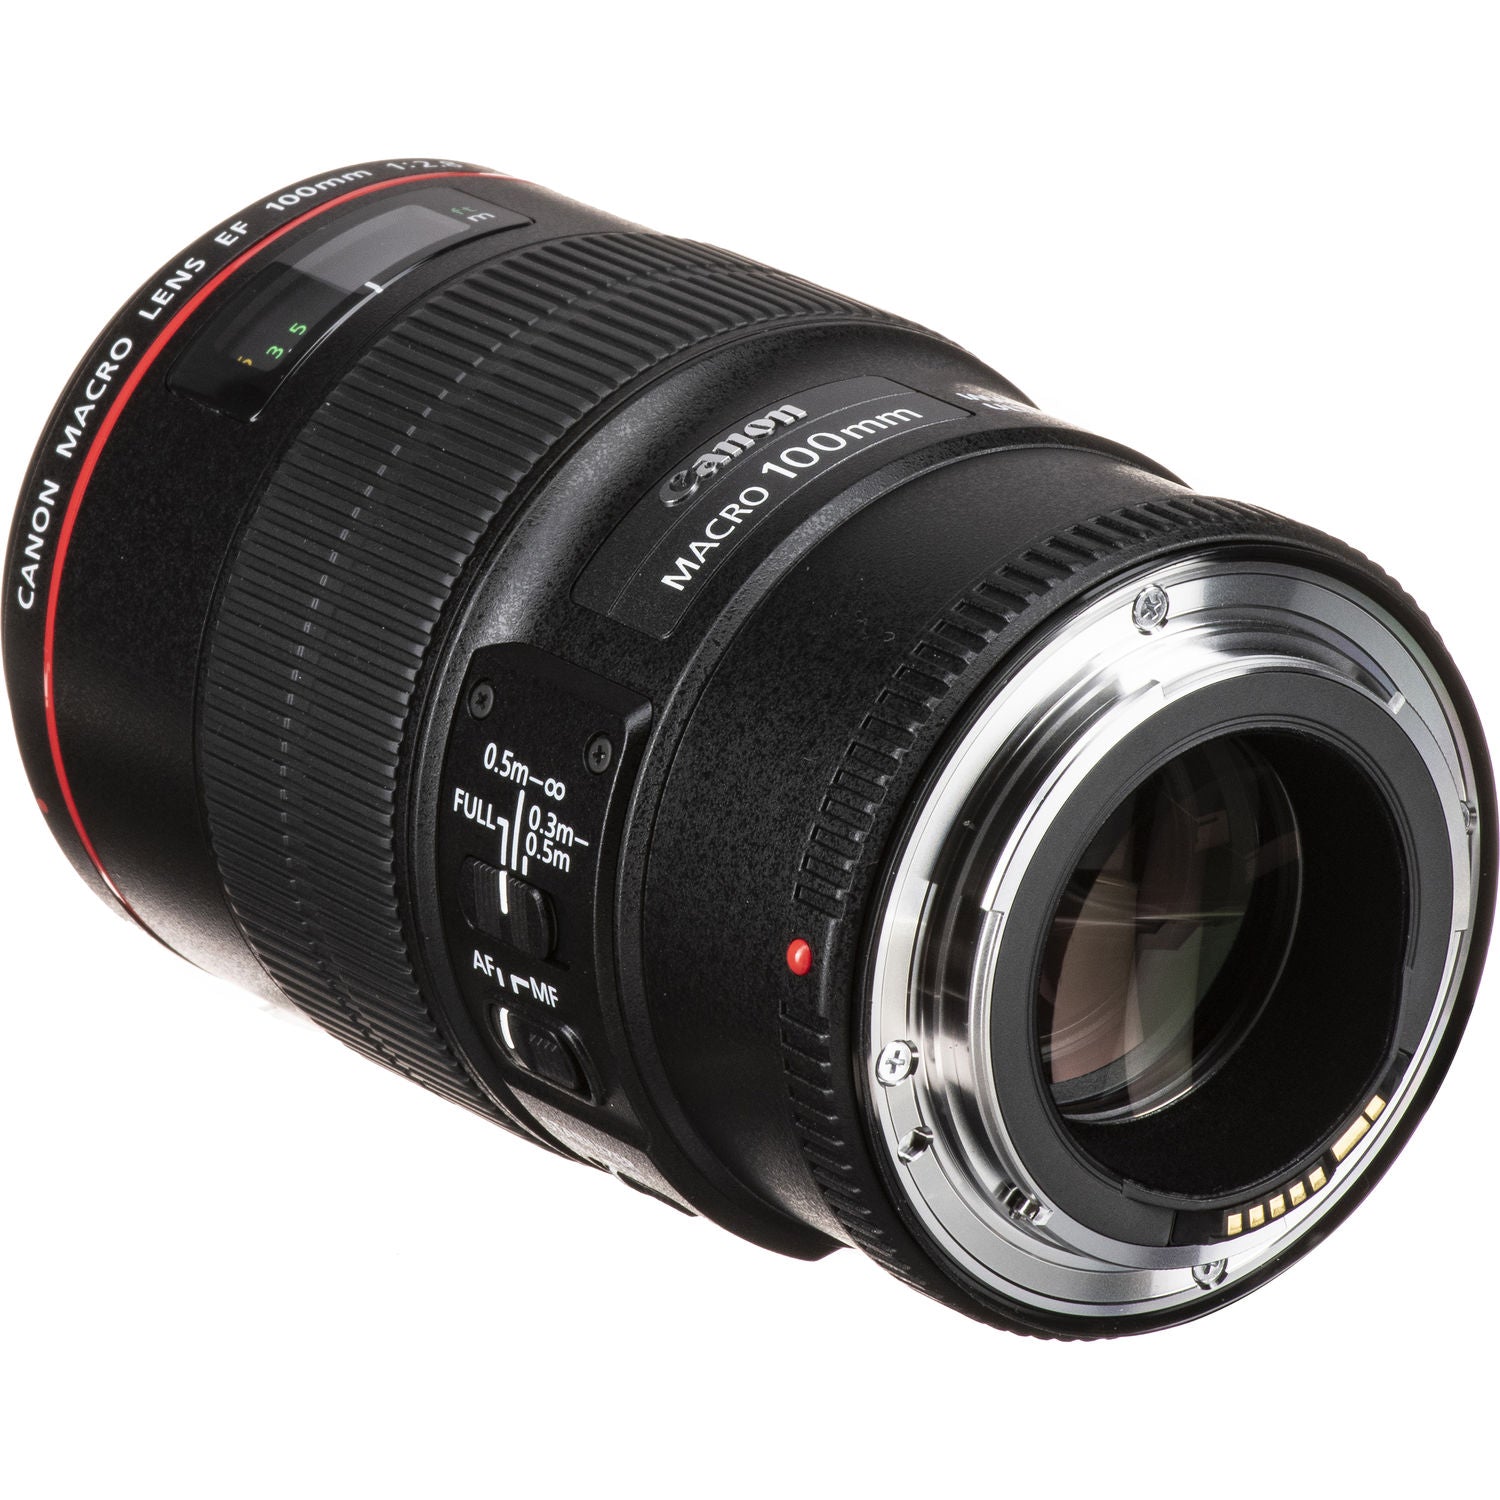 Canon EF 100mm f/2.8L Macro IS USM Lens (3554B002) Bundle  Includes: 3PC Filter Kit, Pro Camera Hand Strap + More